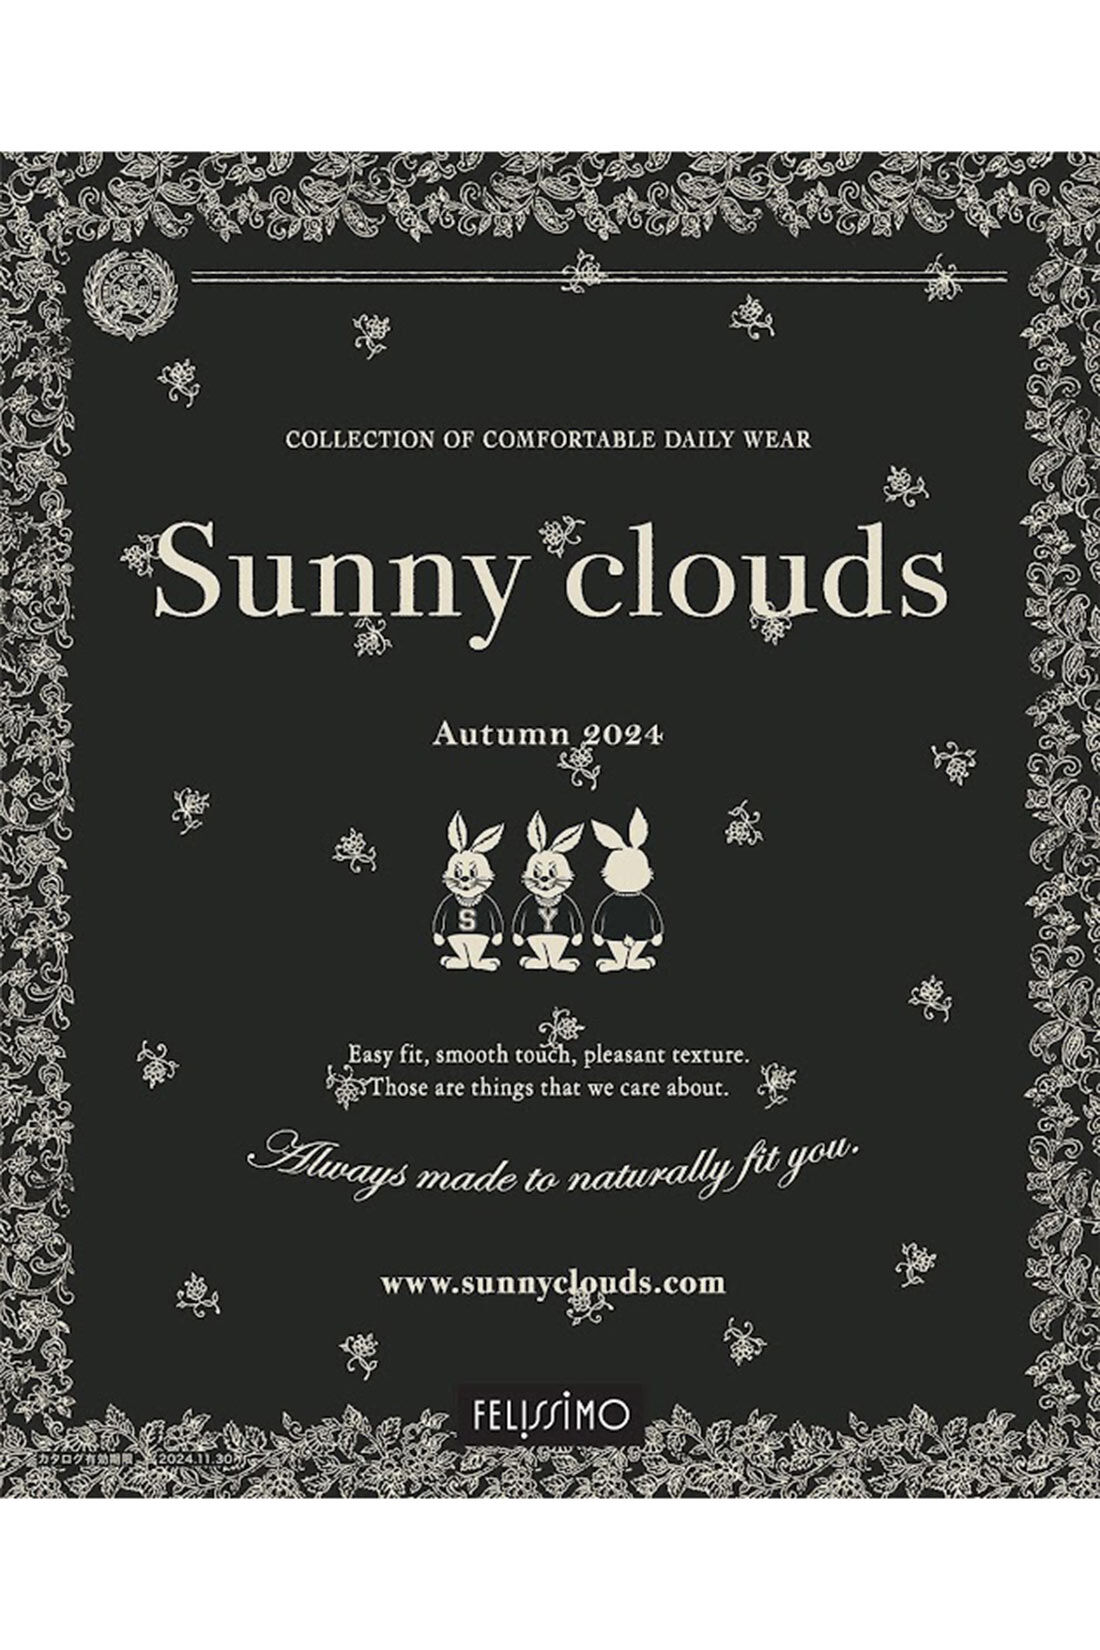 Sunny clouds|『サニークラウズ』カタログ予約|画像は夏号のイメージです